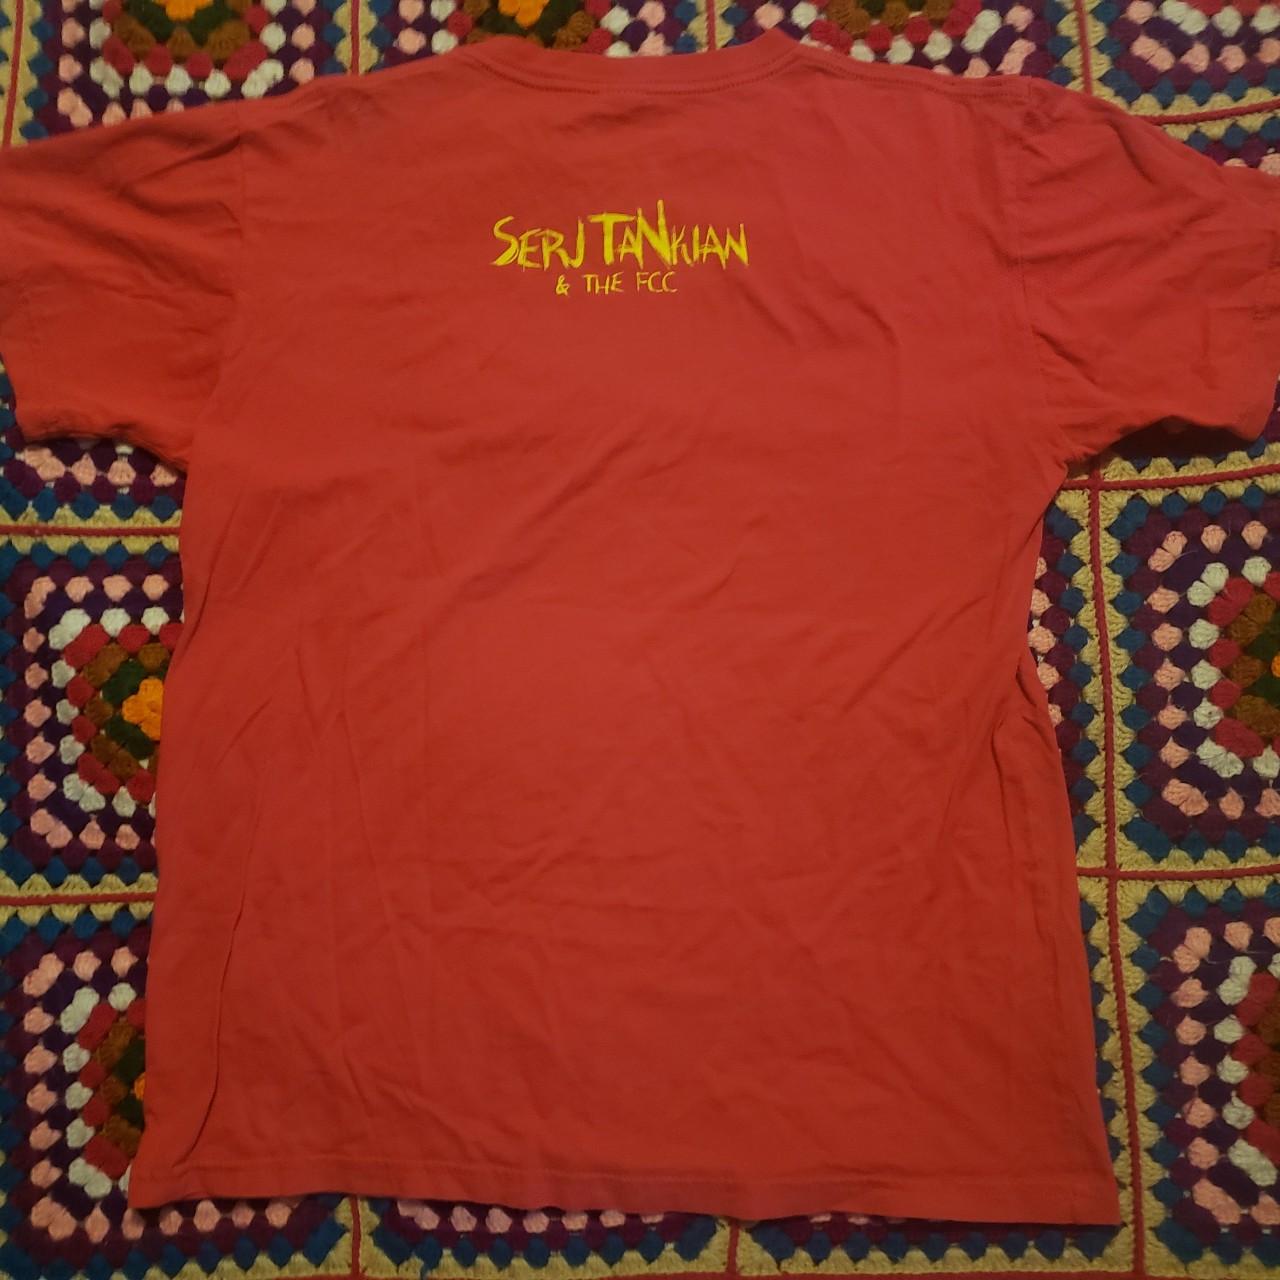 Sunspel Men's Red and Black T-shirt (2)